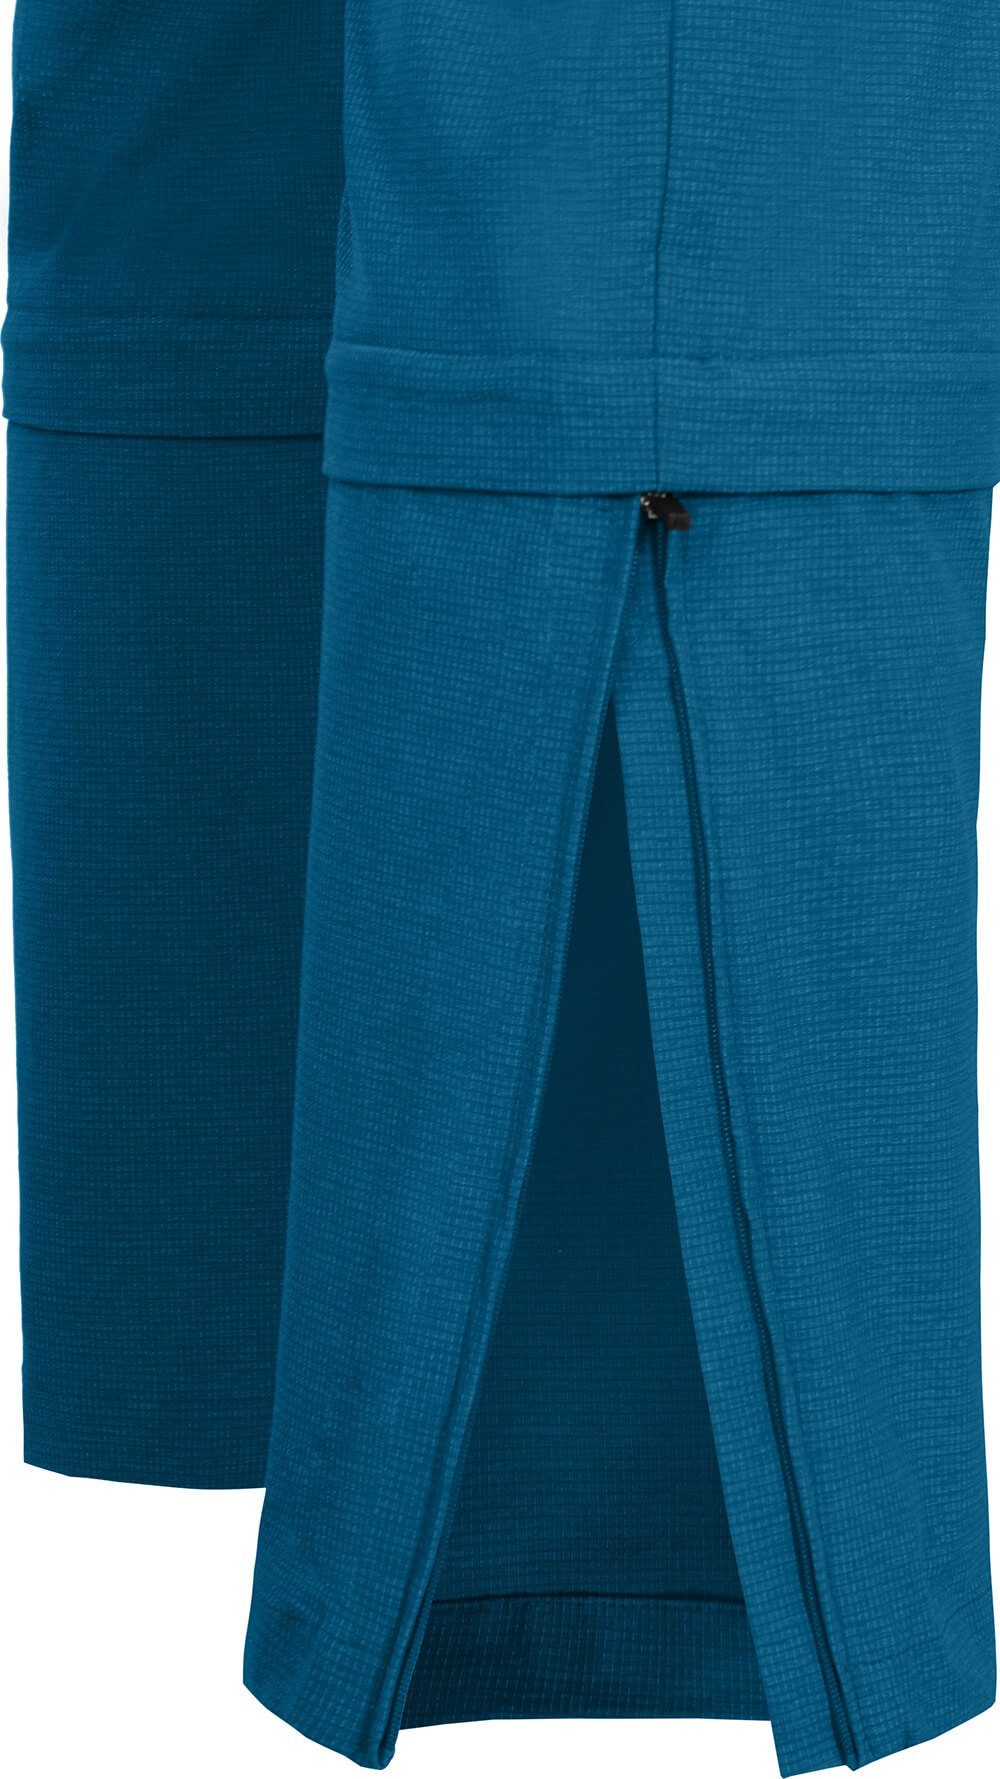 LEBIKO Normalgrößen, mit Zip-off-Hose Saphir blau Doppel T-ZIPP Herren Zipp-Off robust Wanderhose, elastisch, Bergson